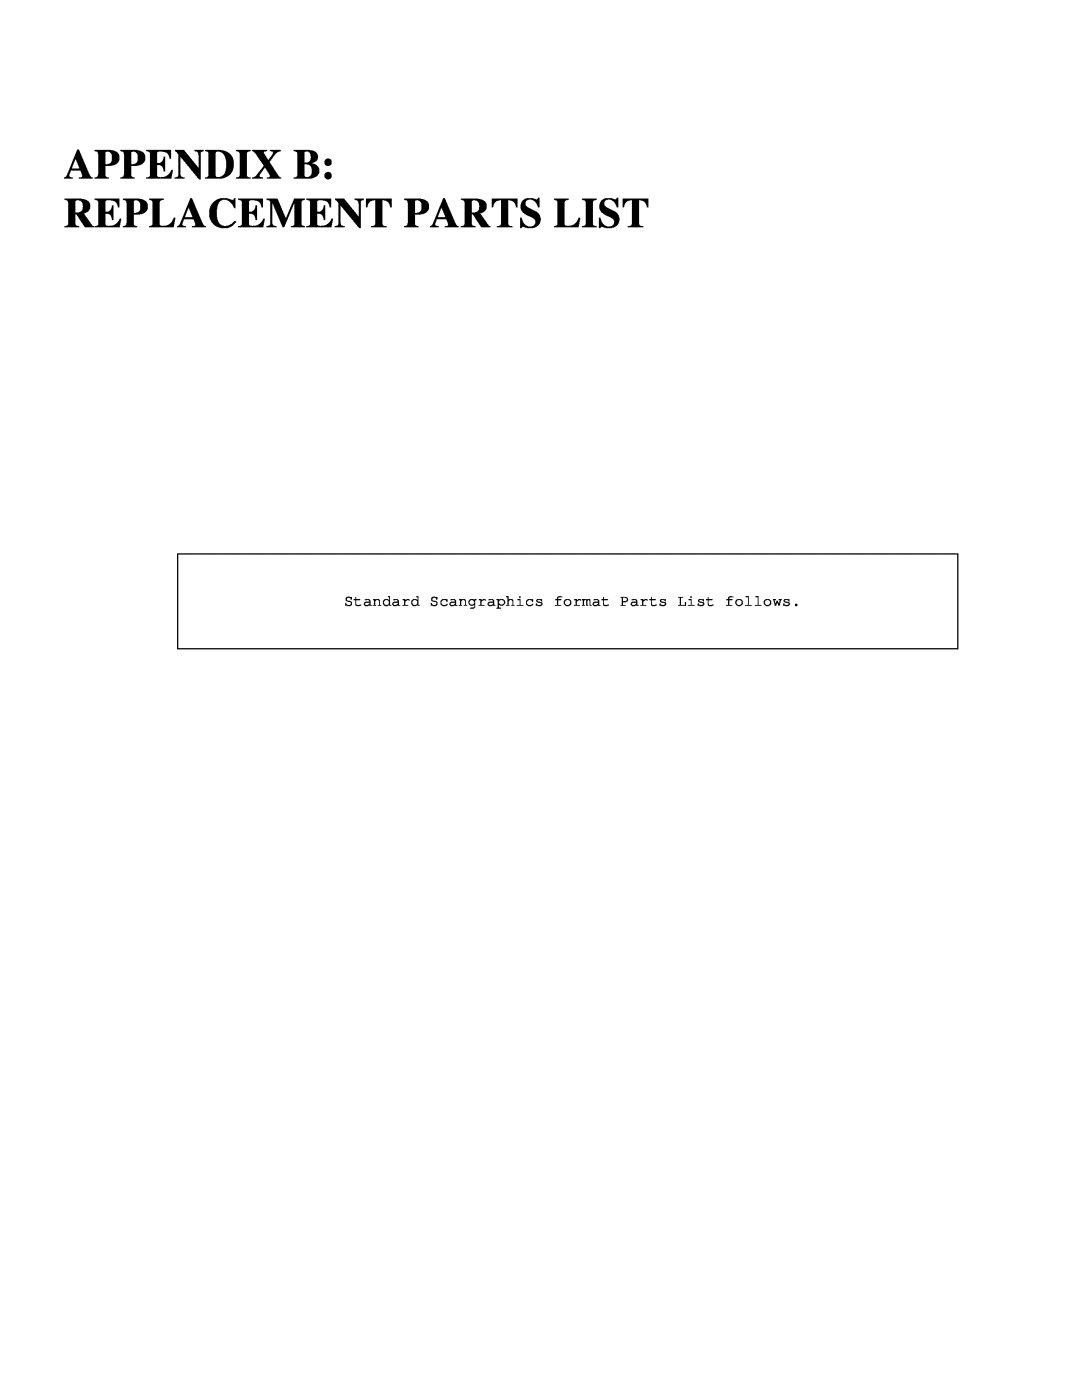 IBM CF Series manual Appendix B Replacement Parts List, Standard Scangraphics format Parts List follows 